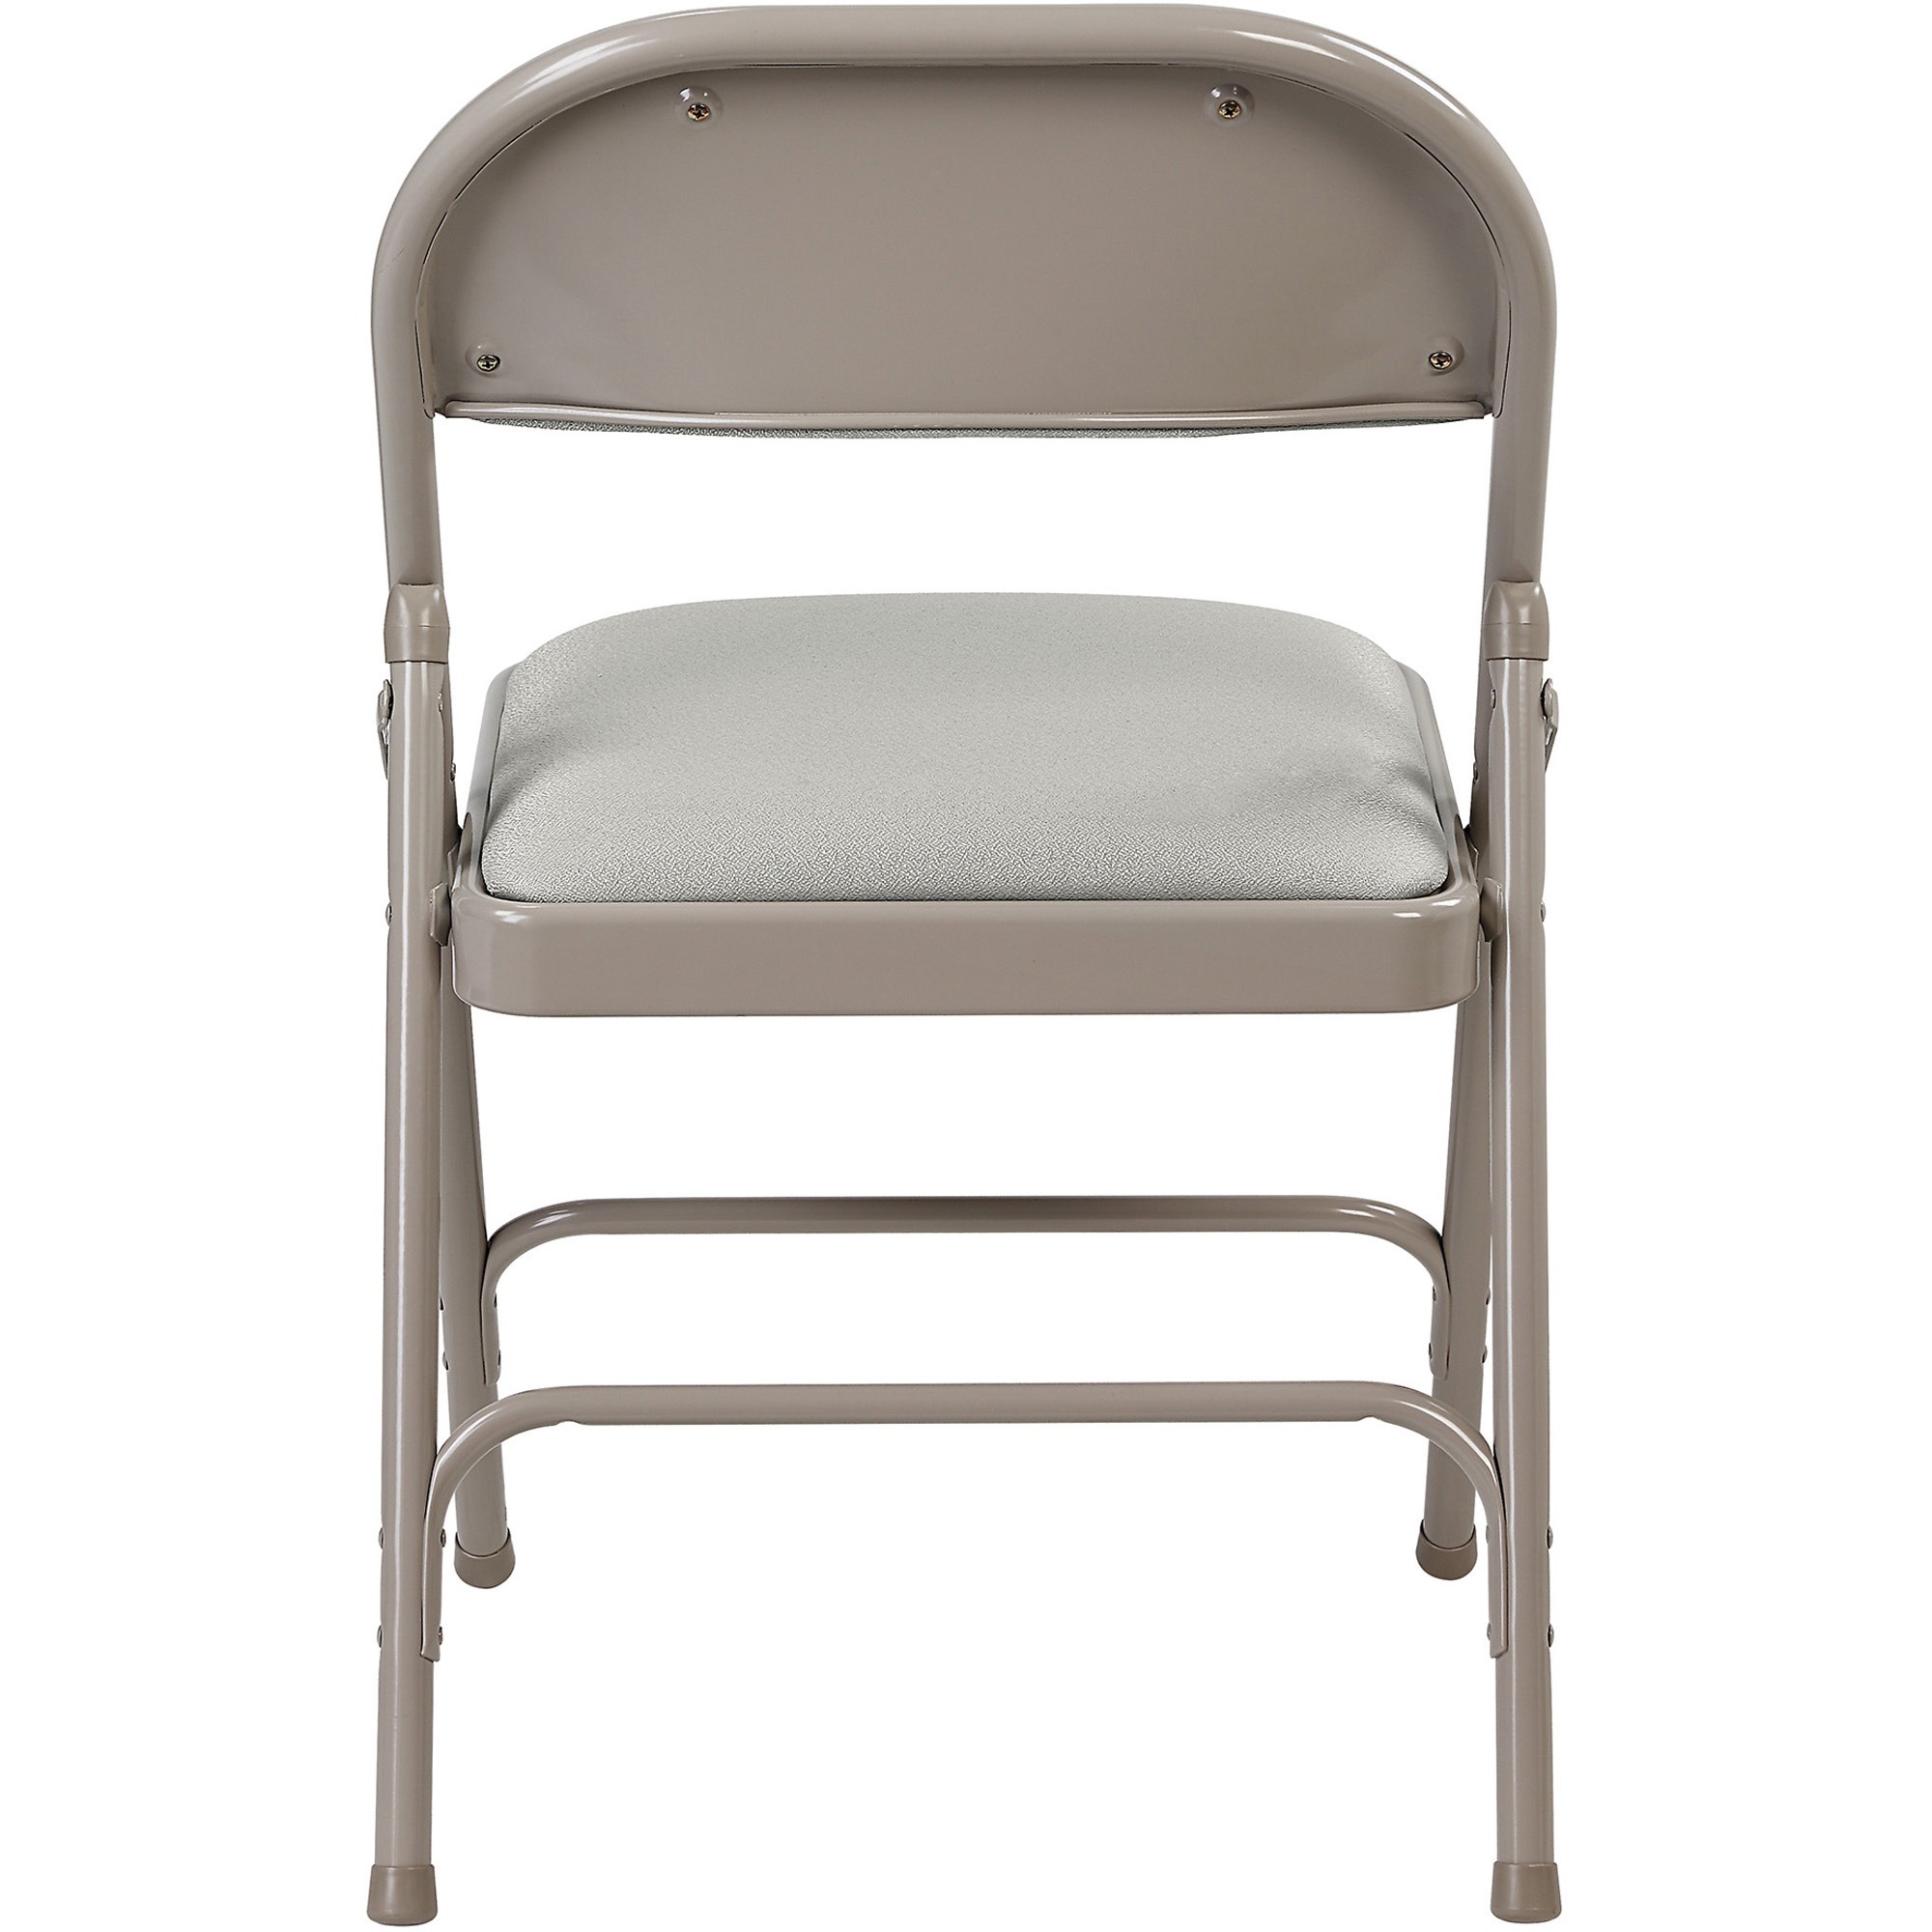 Grey Padded Folding Chair